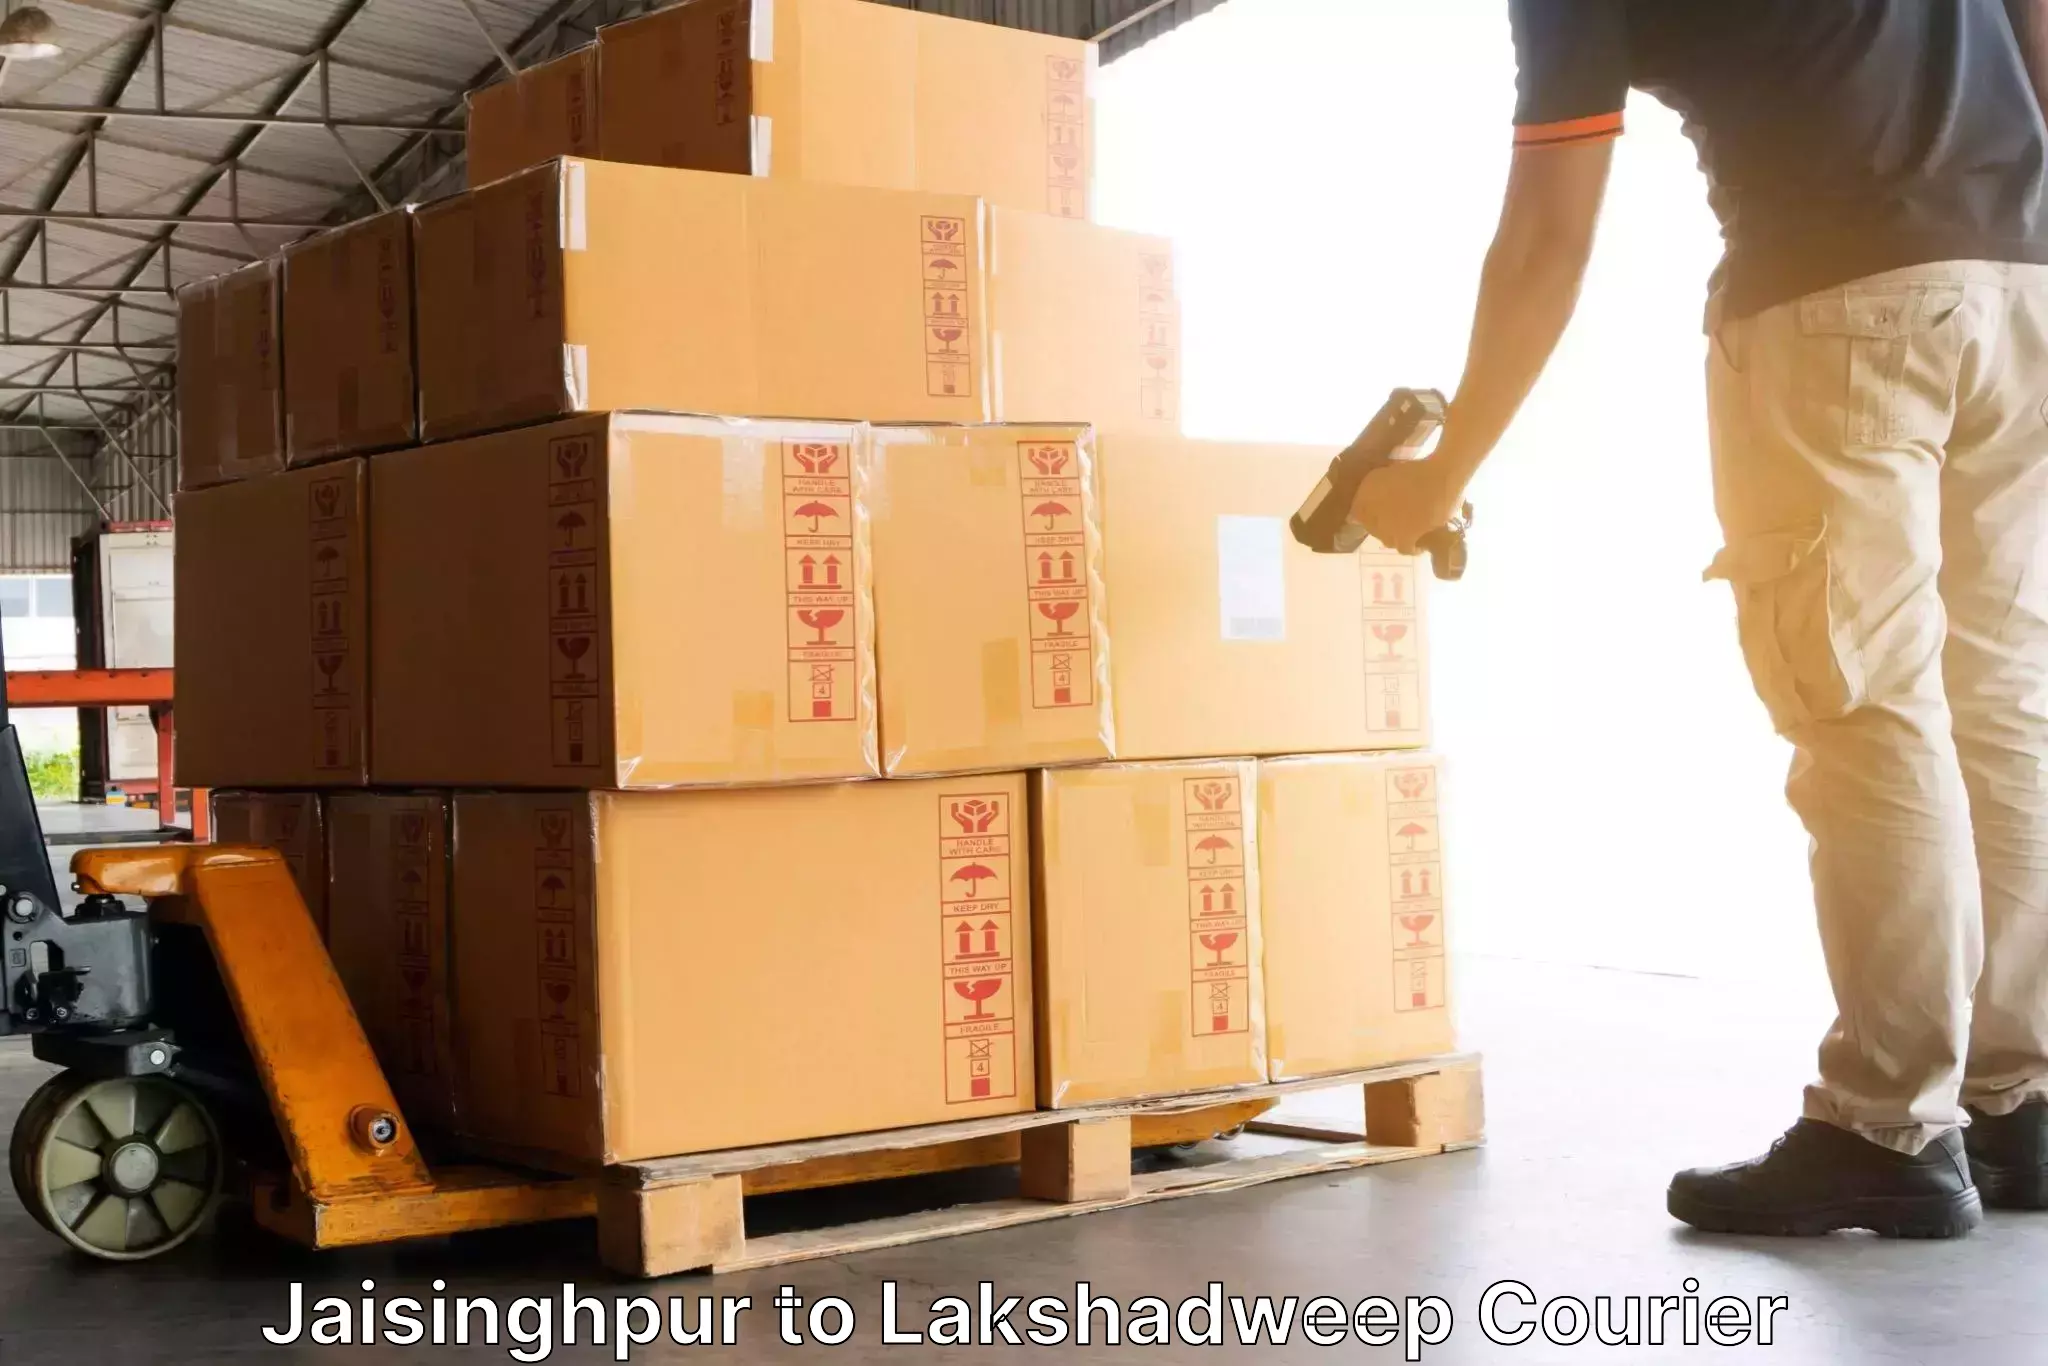 Courier app Jaisinghpur to Lakshadweep